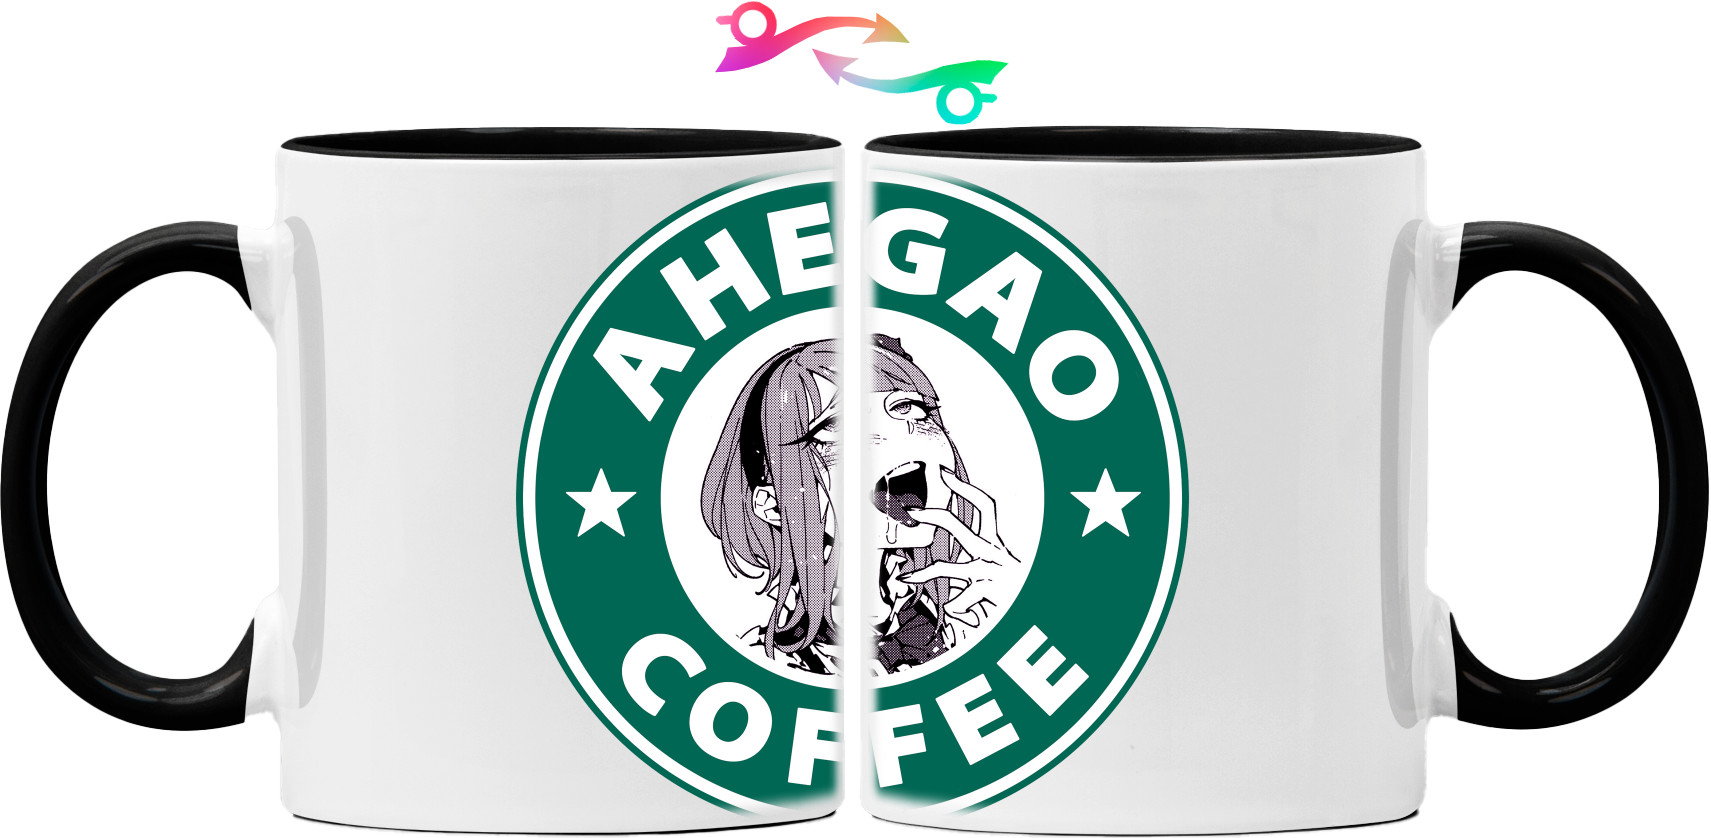 Ahegao coffee